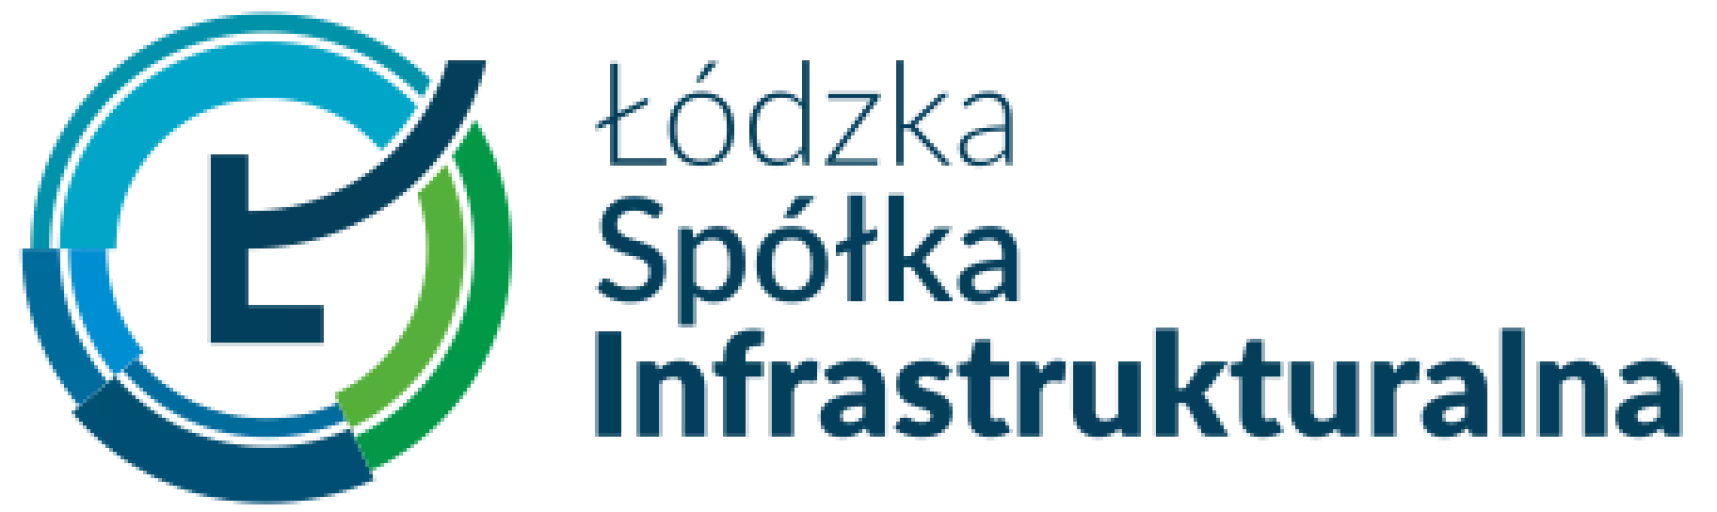 Logo Łódzkiej Spółki Infrastrukturalnej.